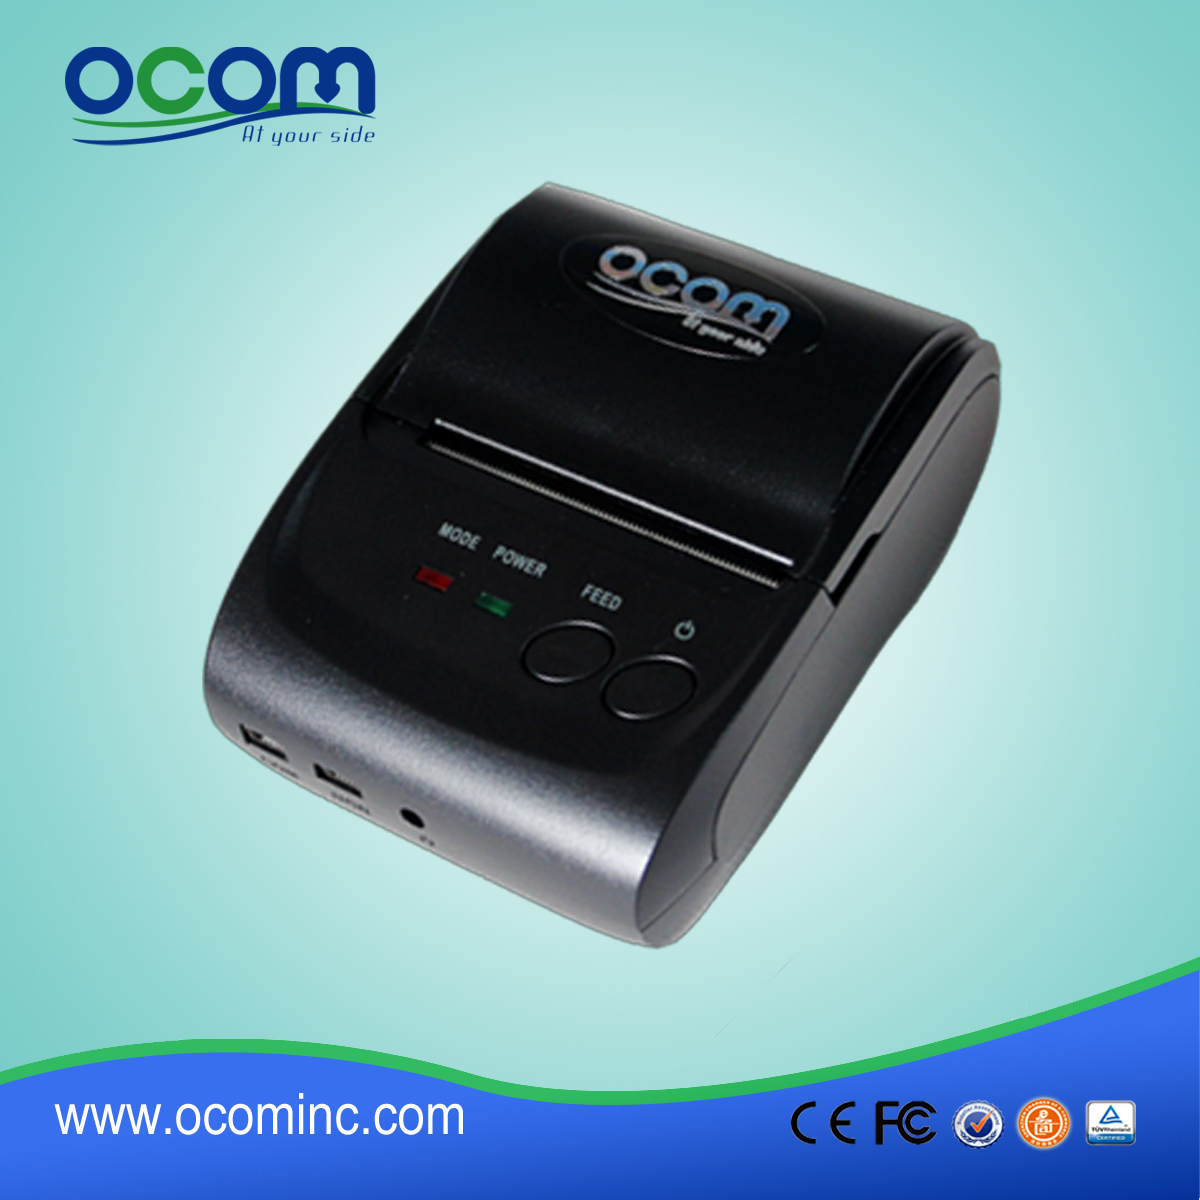 OCPP-M05: hoge kwaliteit mini draagbare Bluetooth mobiele prijs printer